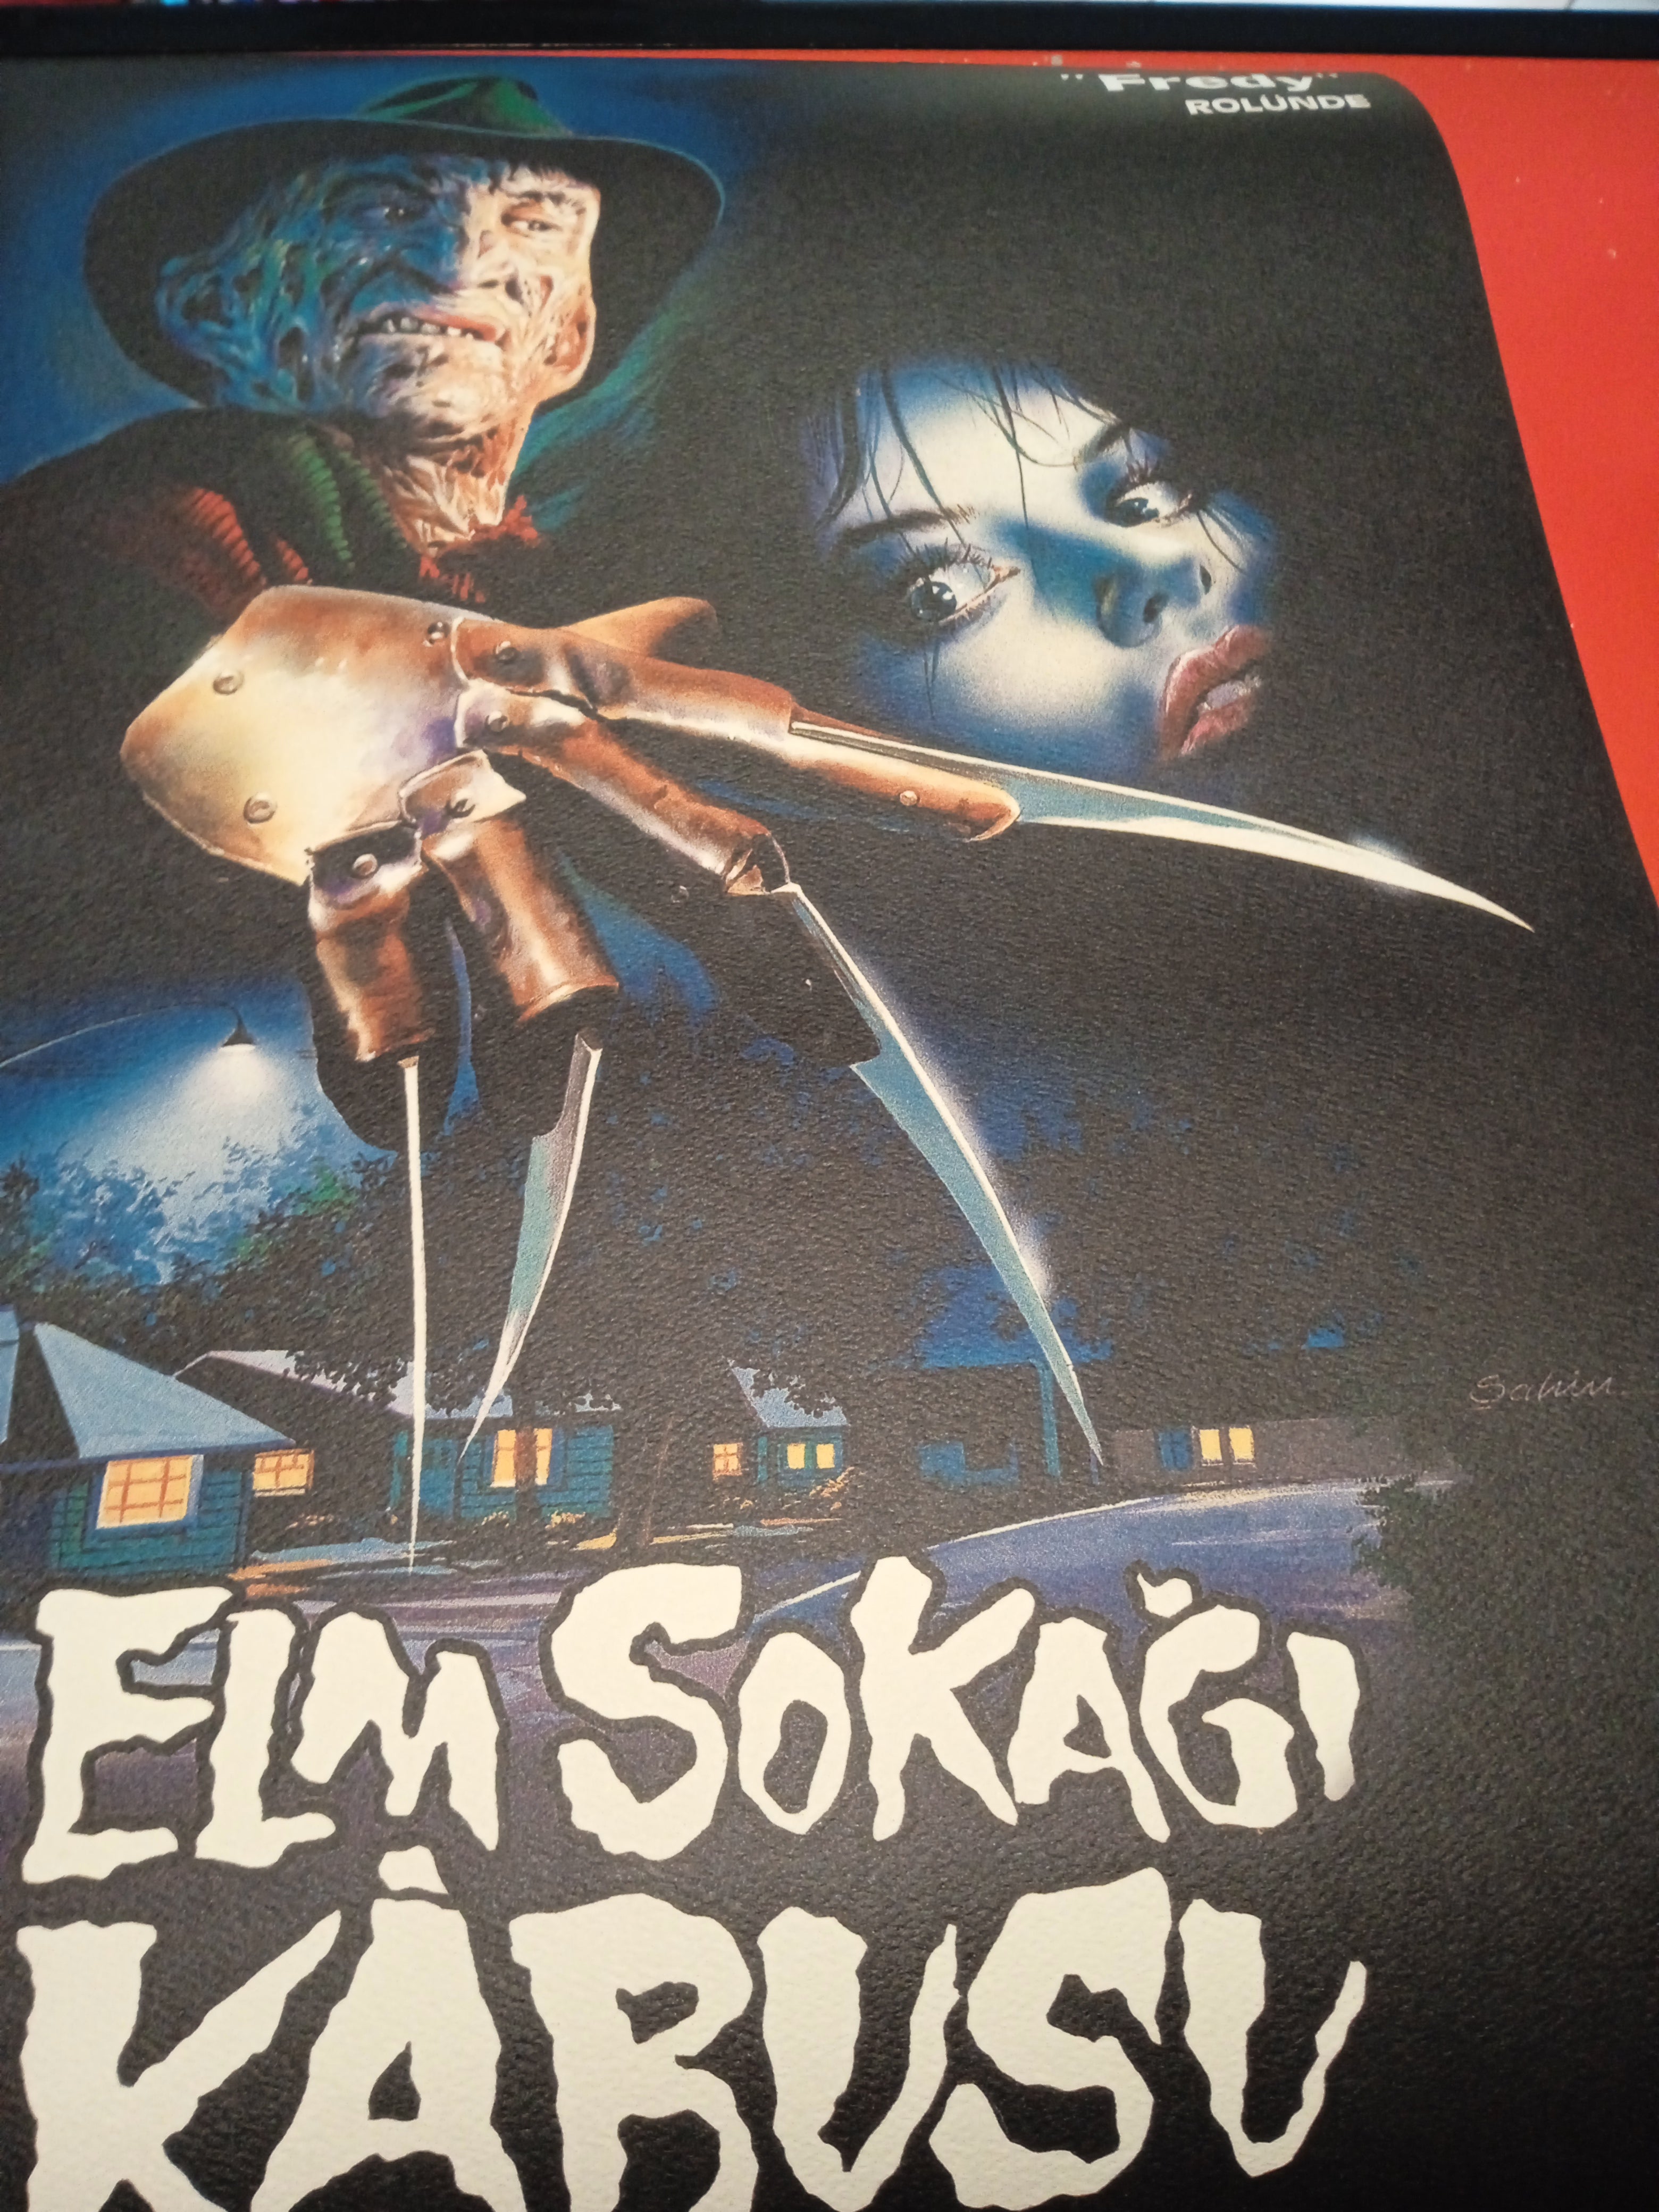 Nightmare on Elm Street Art Print Limited Edition 42 x 30 cm